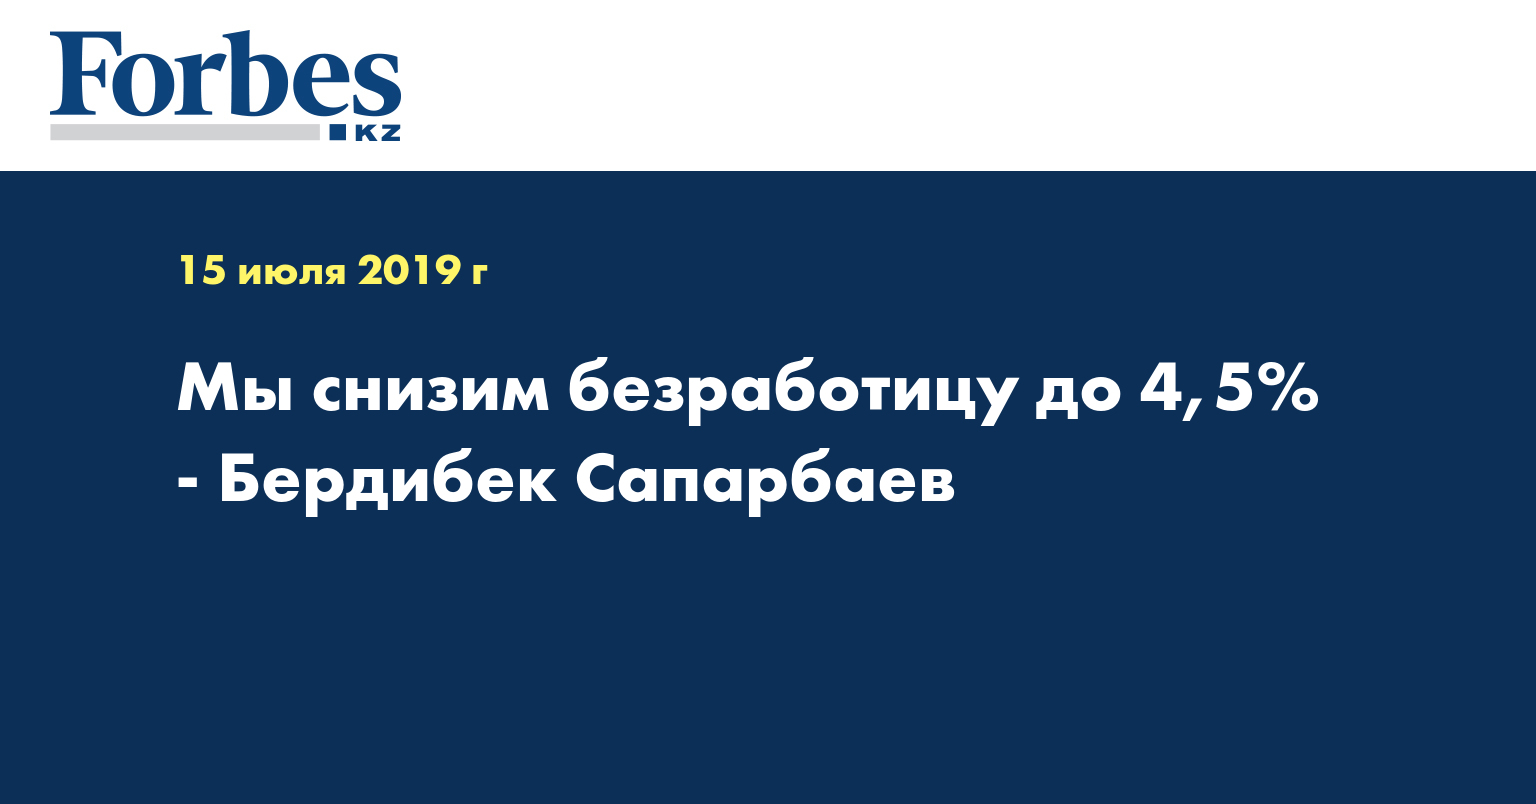 Мы снизим безработицу до 4,5% - Бердибек Сапарбаев